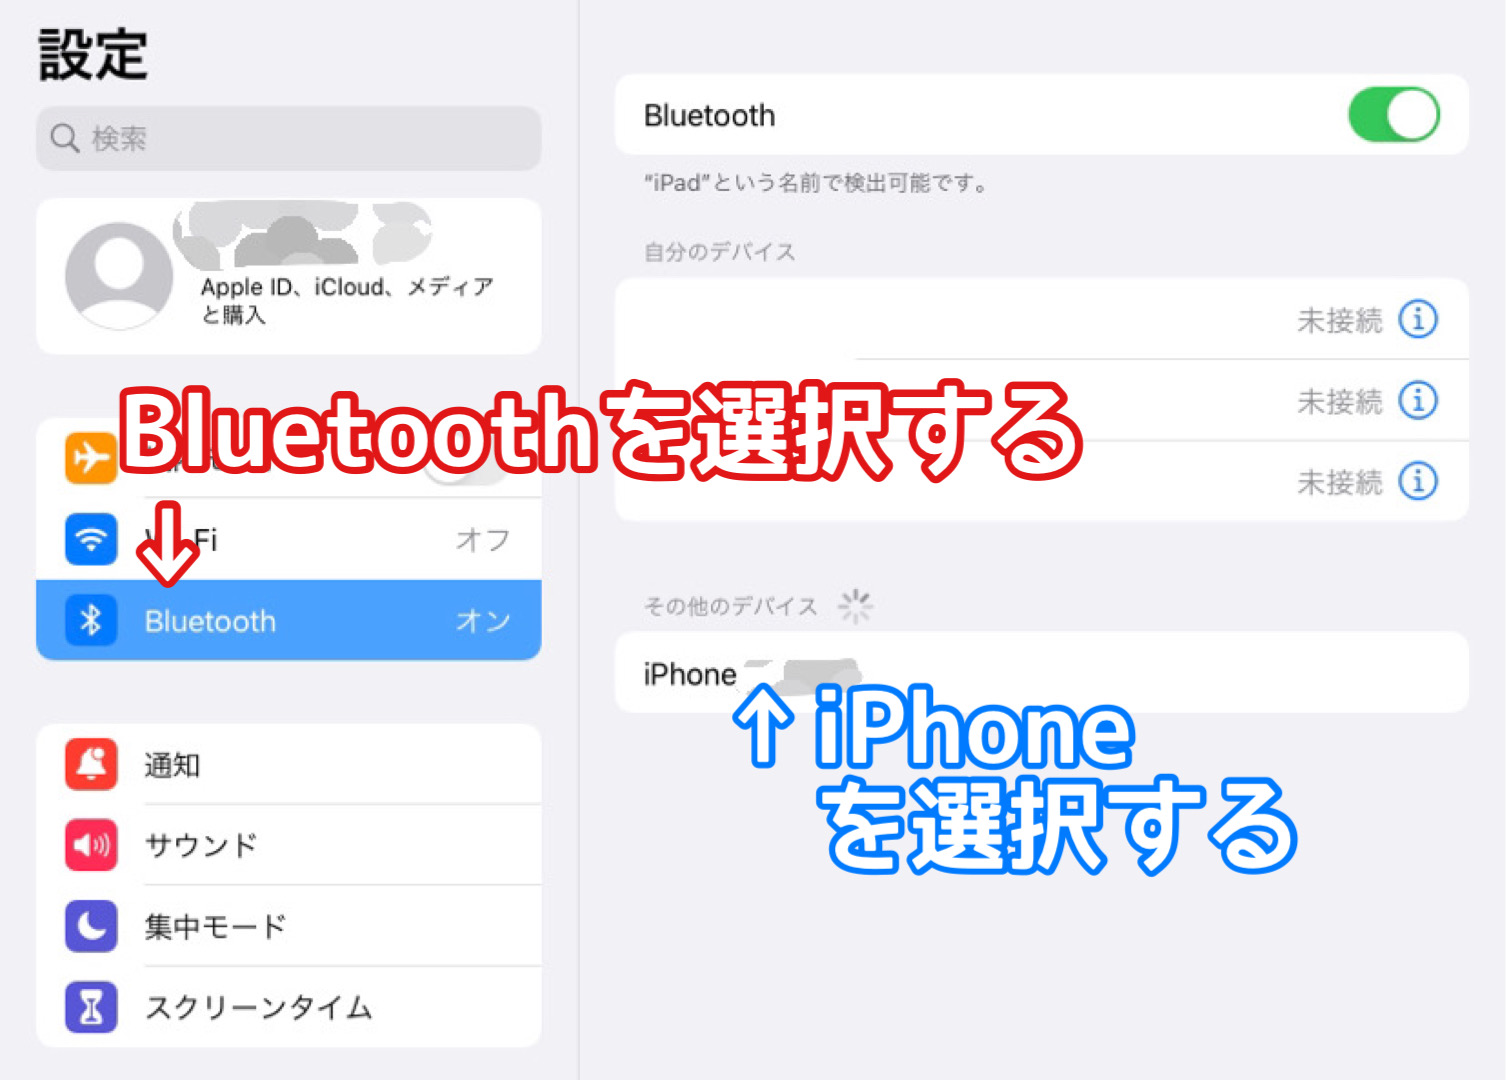 iPadのBluetooth設定画面